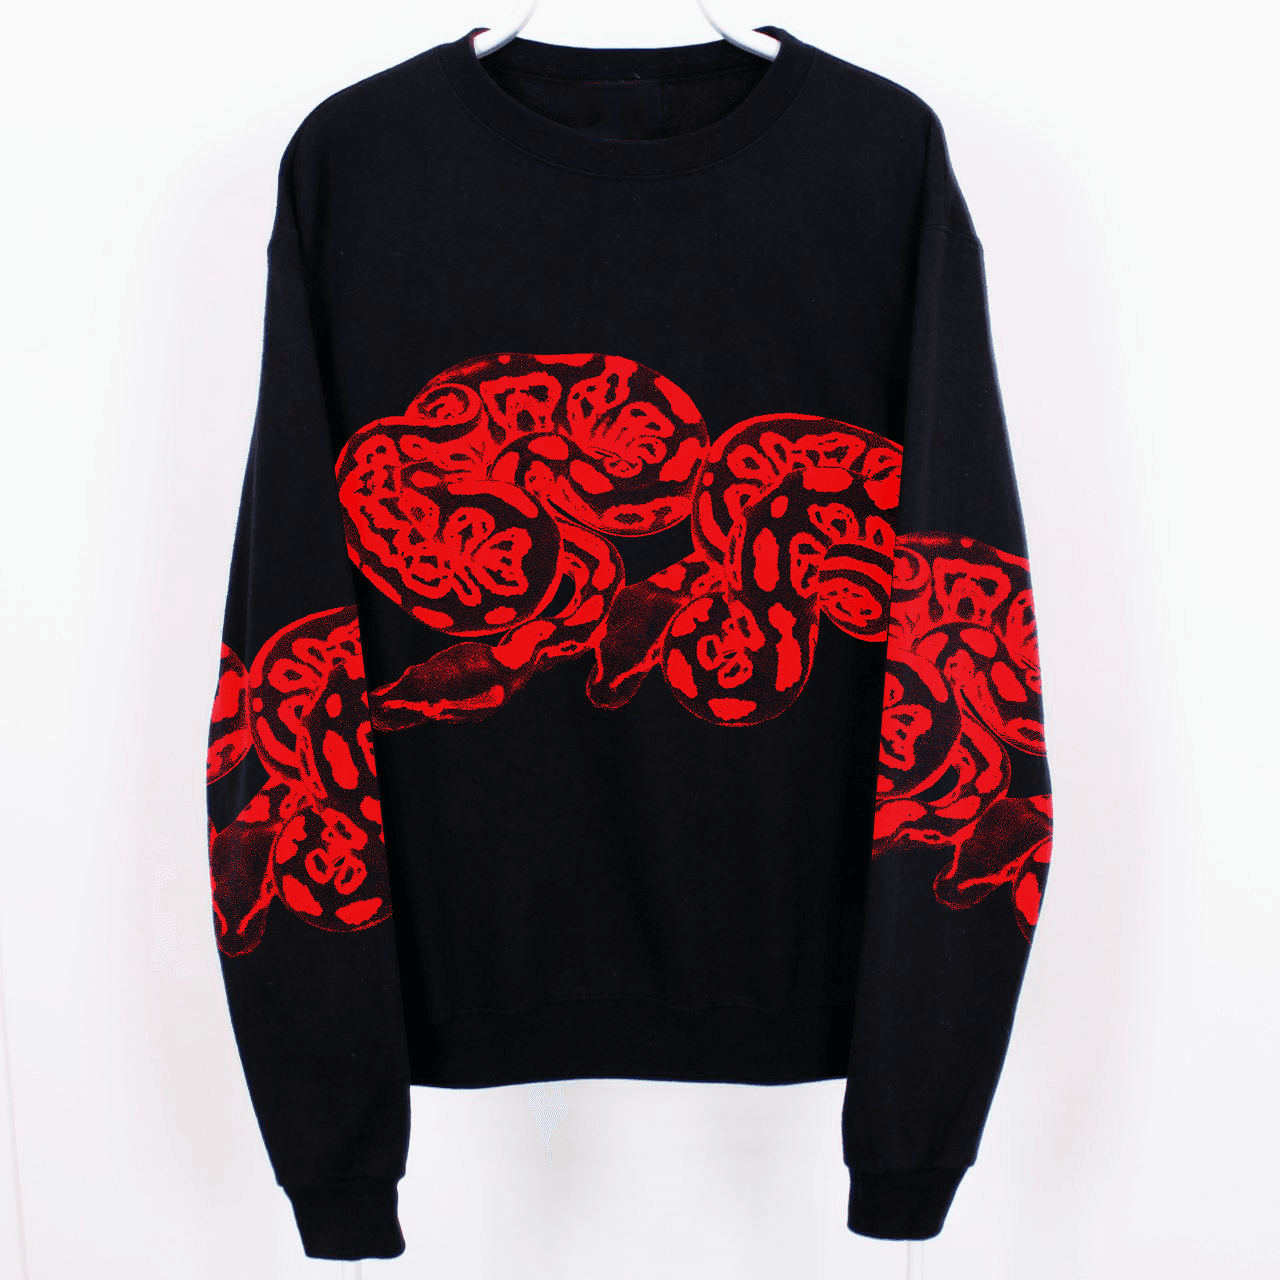 Snake Sea Red® Unisex Sweatshirt (7 pieces for sale) - Kikillo Club